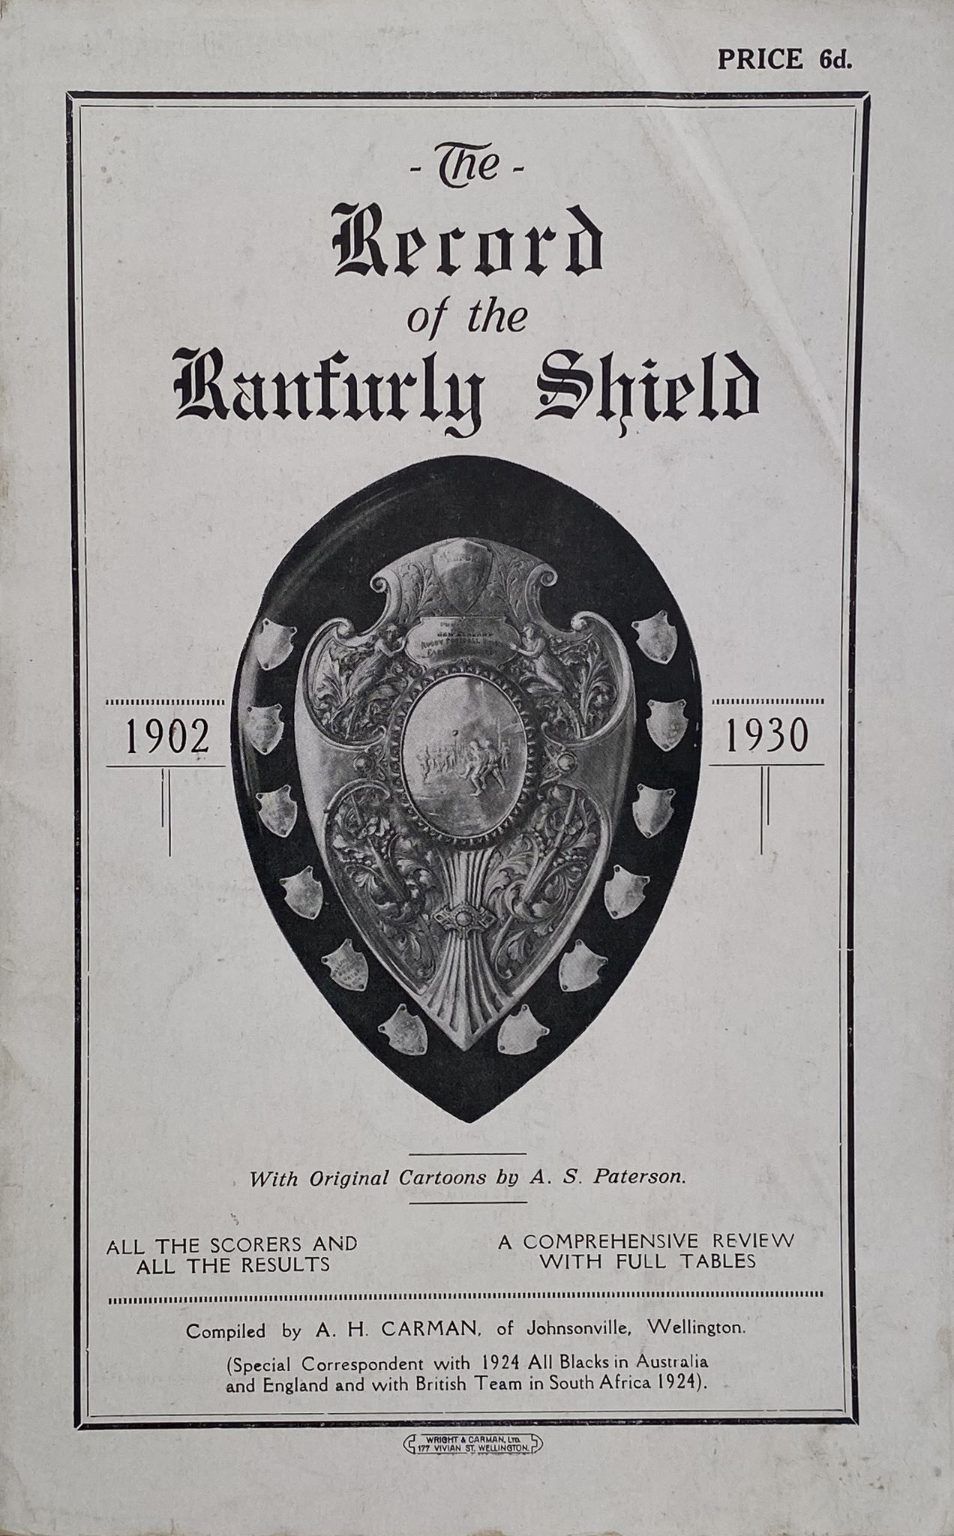 RANFURLY SHIELD: The Record 1902 - 1930